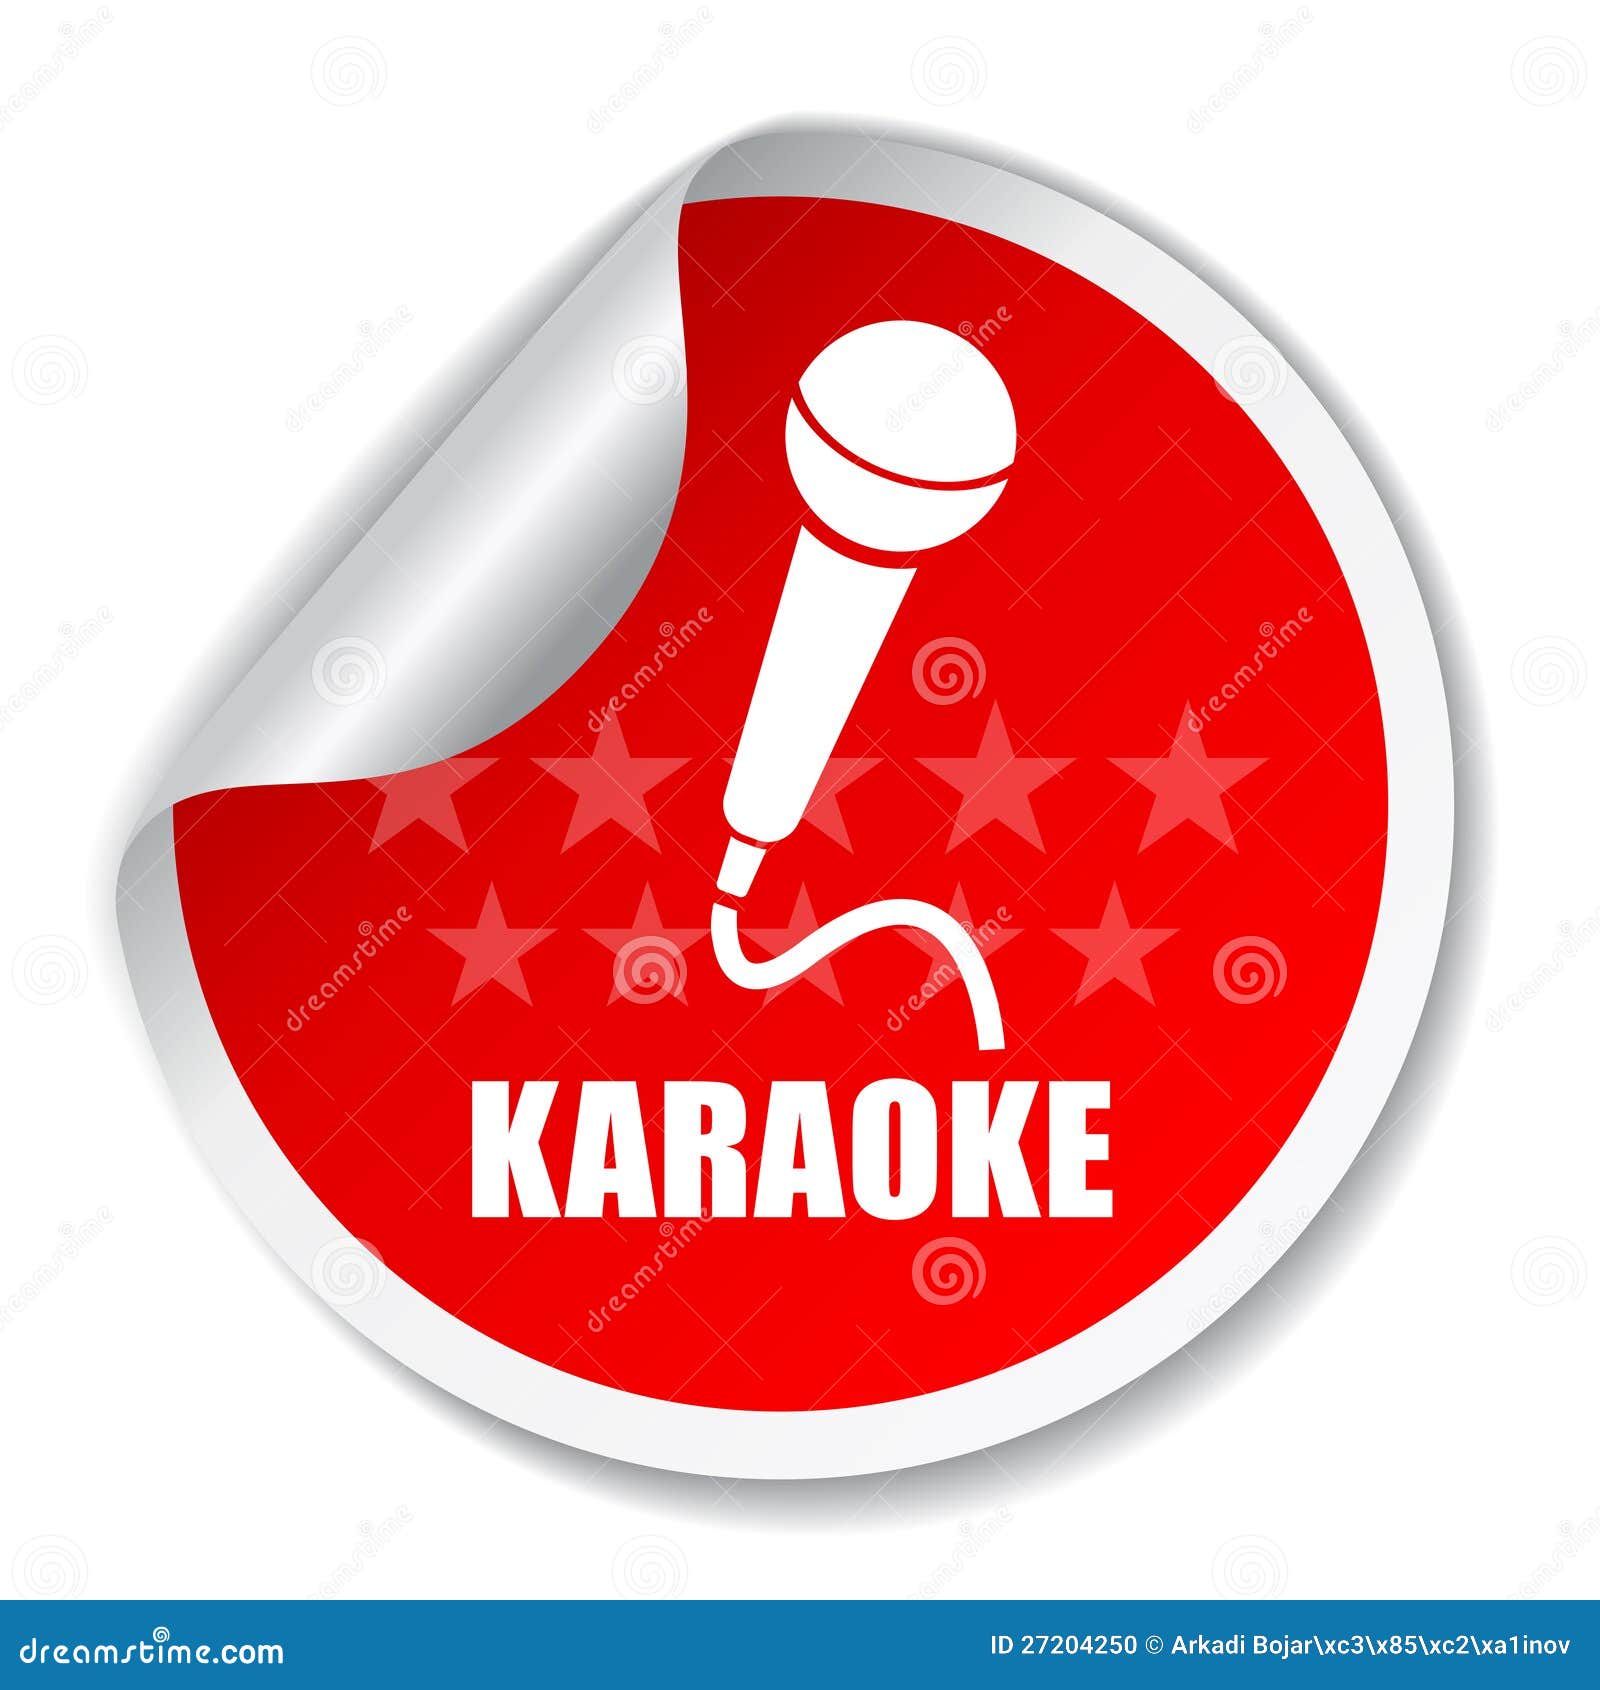 karaoke clip art free download - photo #12